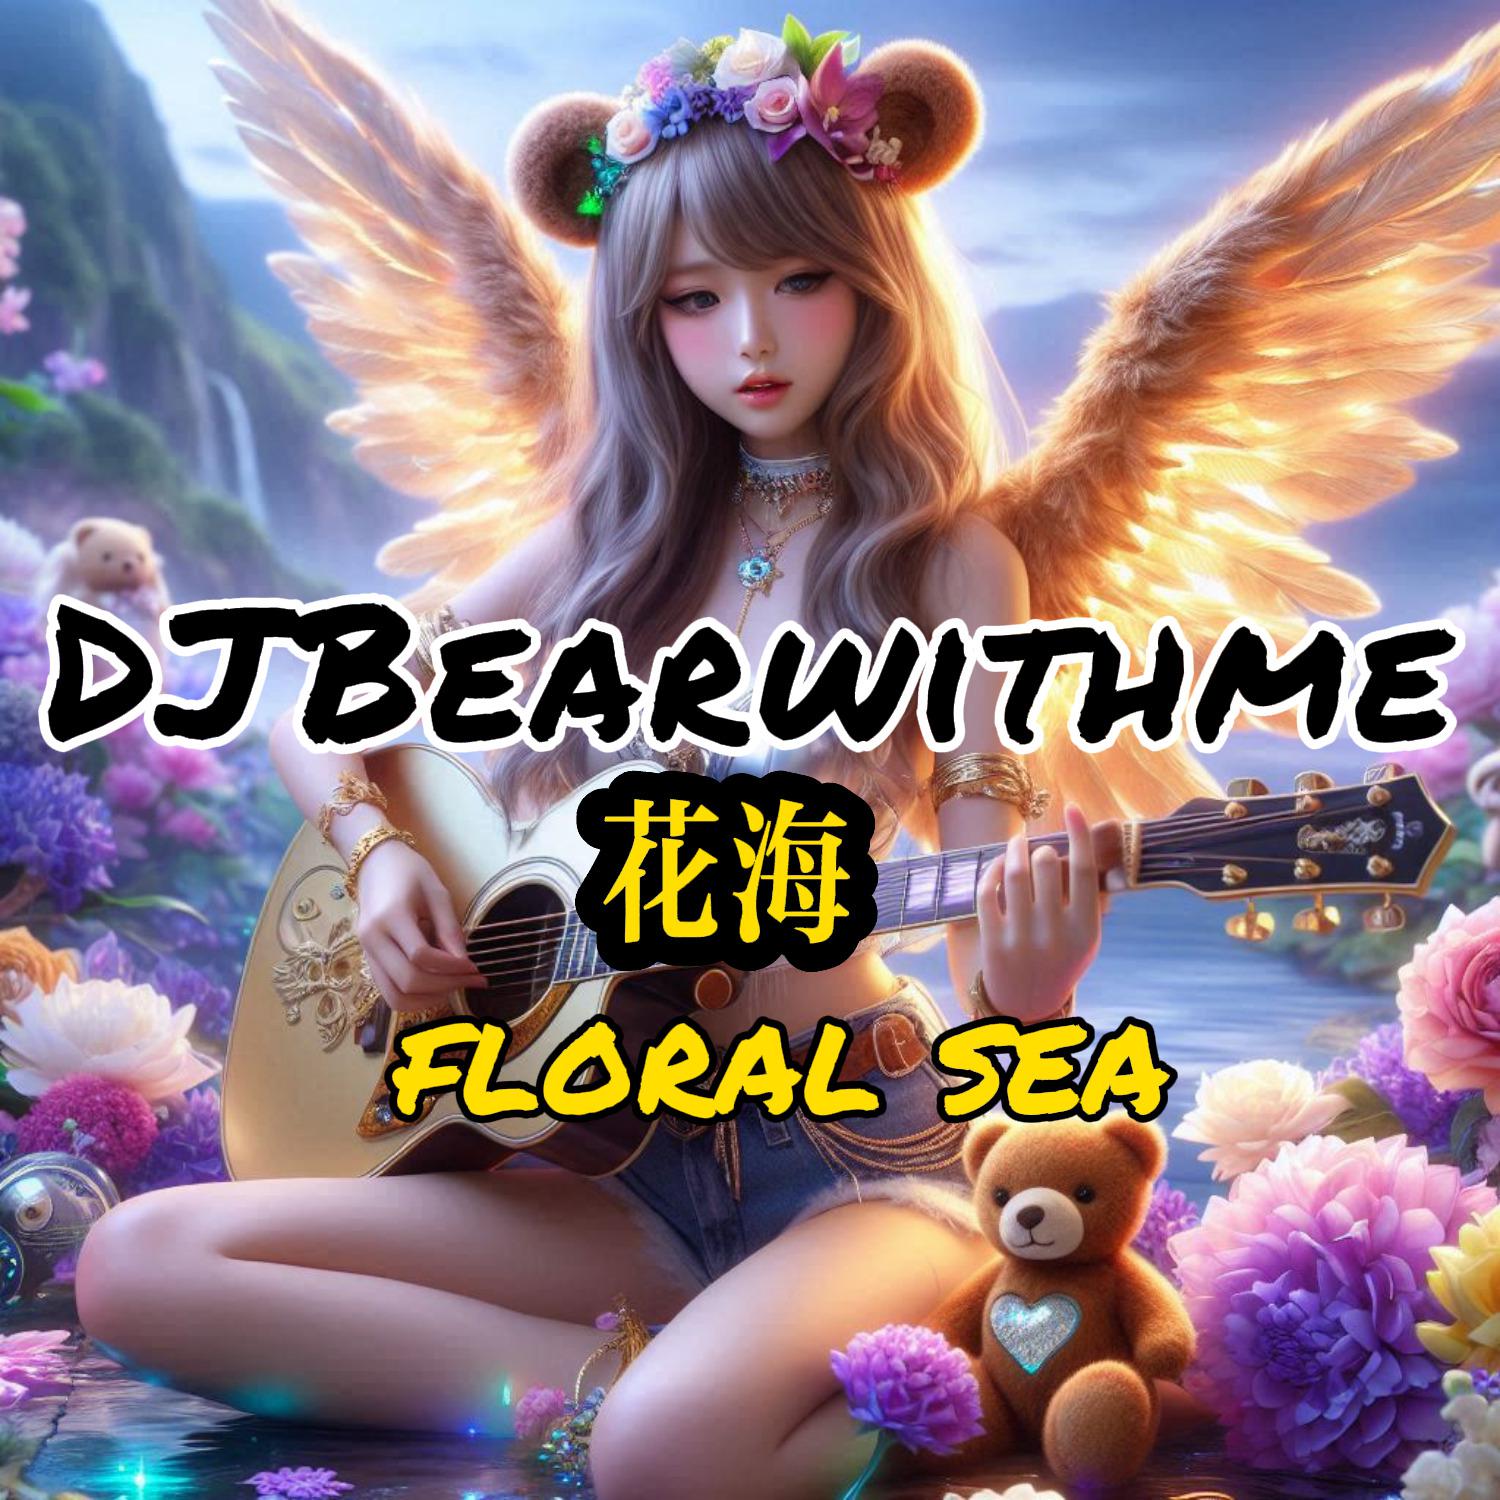 DJBearwithme - 花海 Floral Sea (Instrumental)